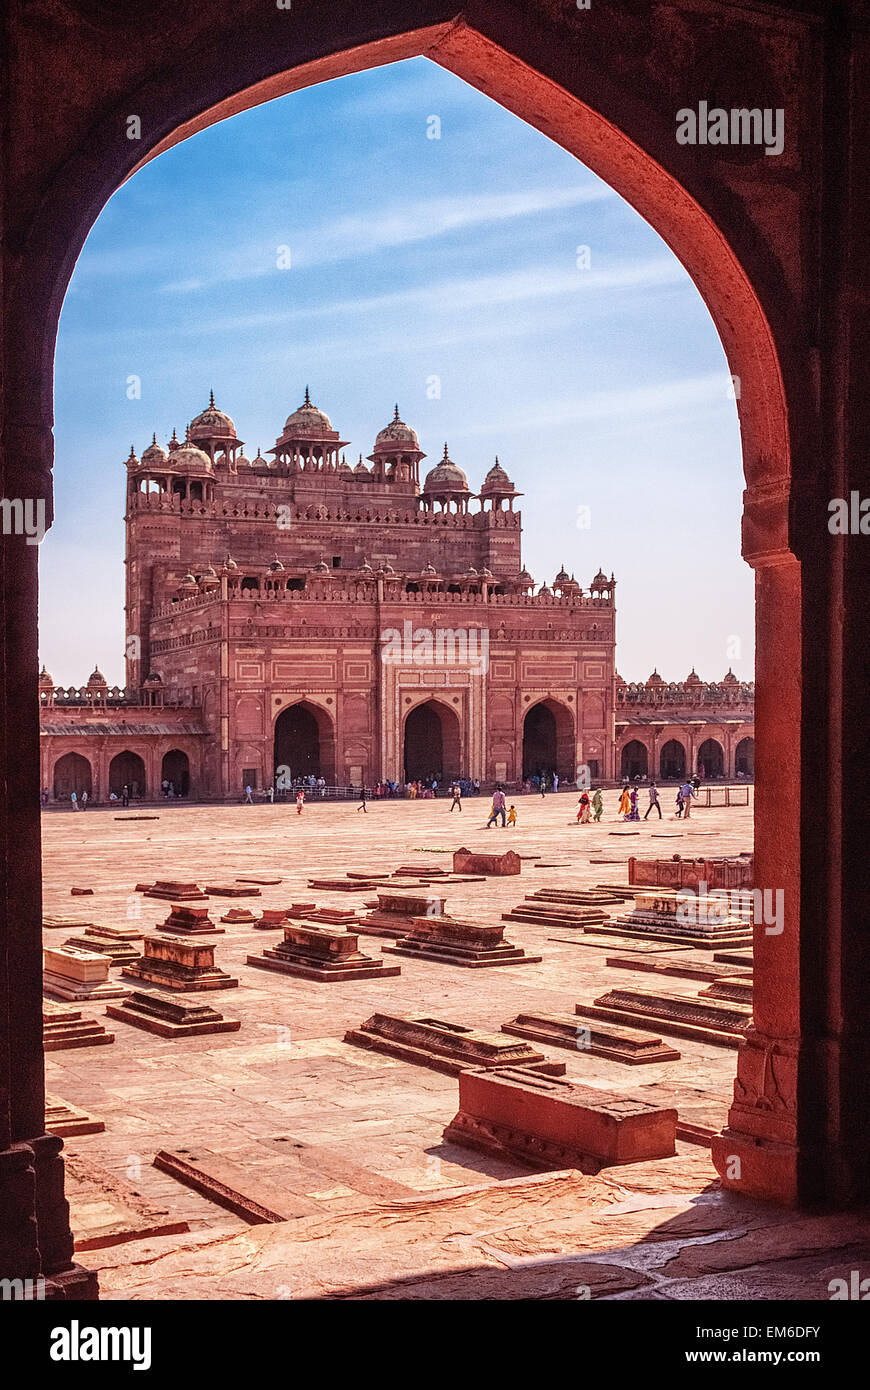 Fatehpur Sikri - Hof Palast mit Gräbern, Bogen gerahmte Blick Stockfoto